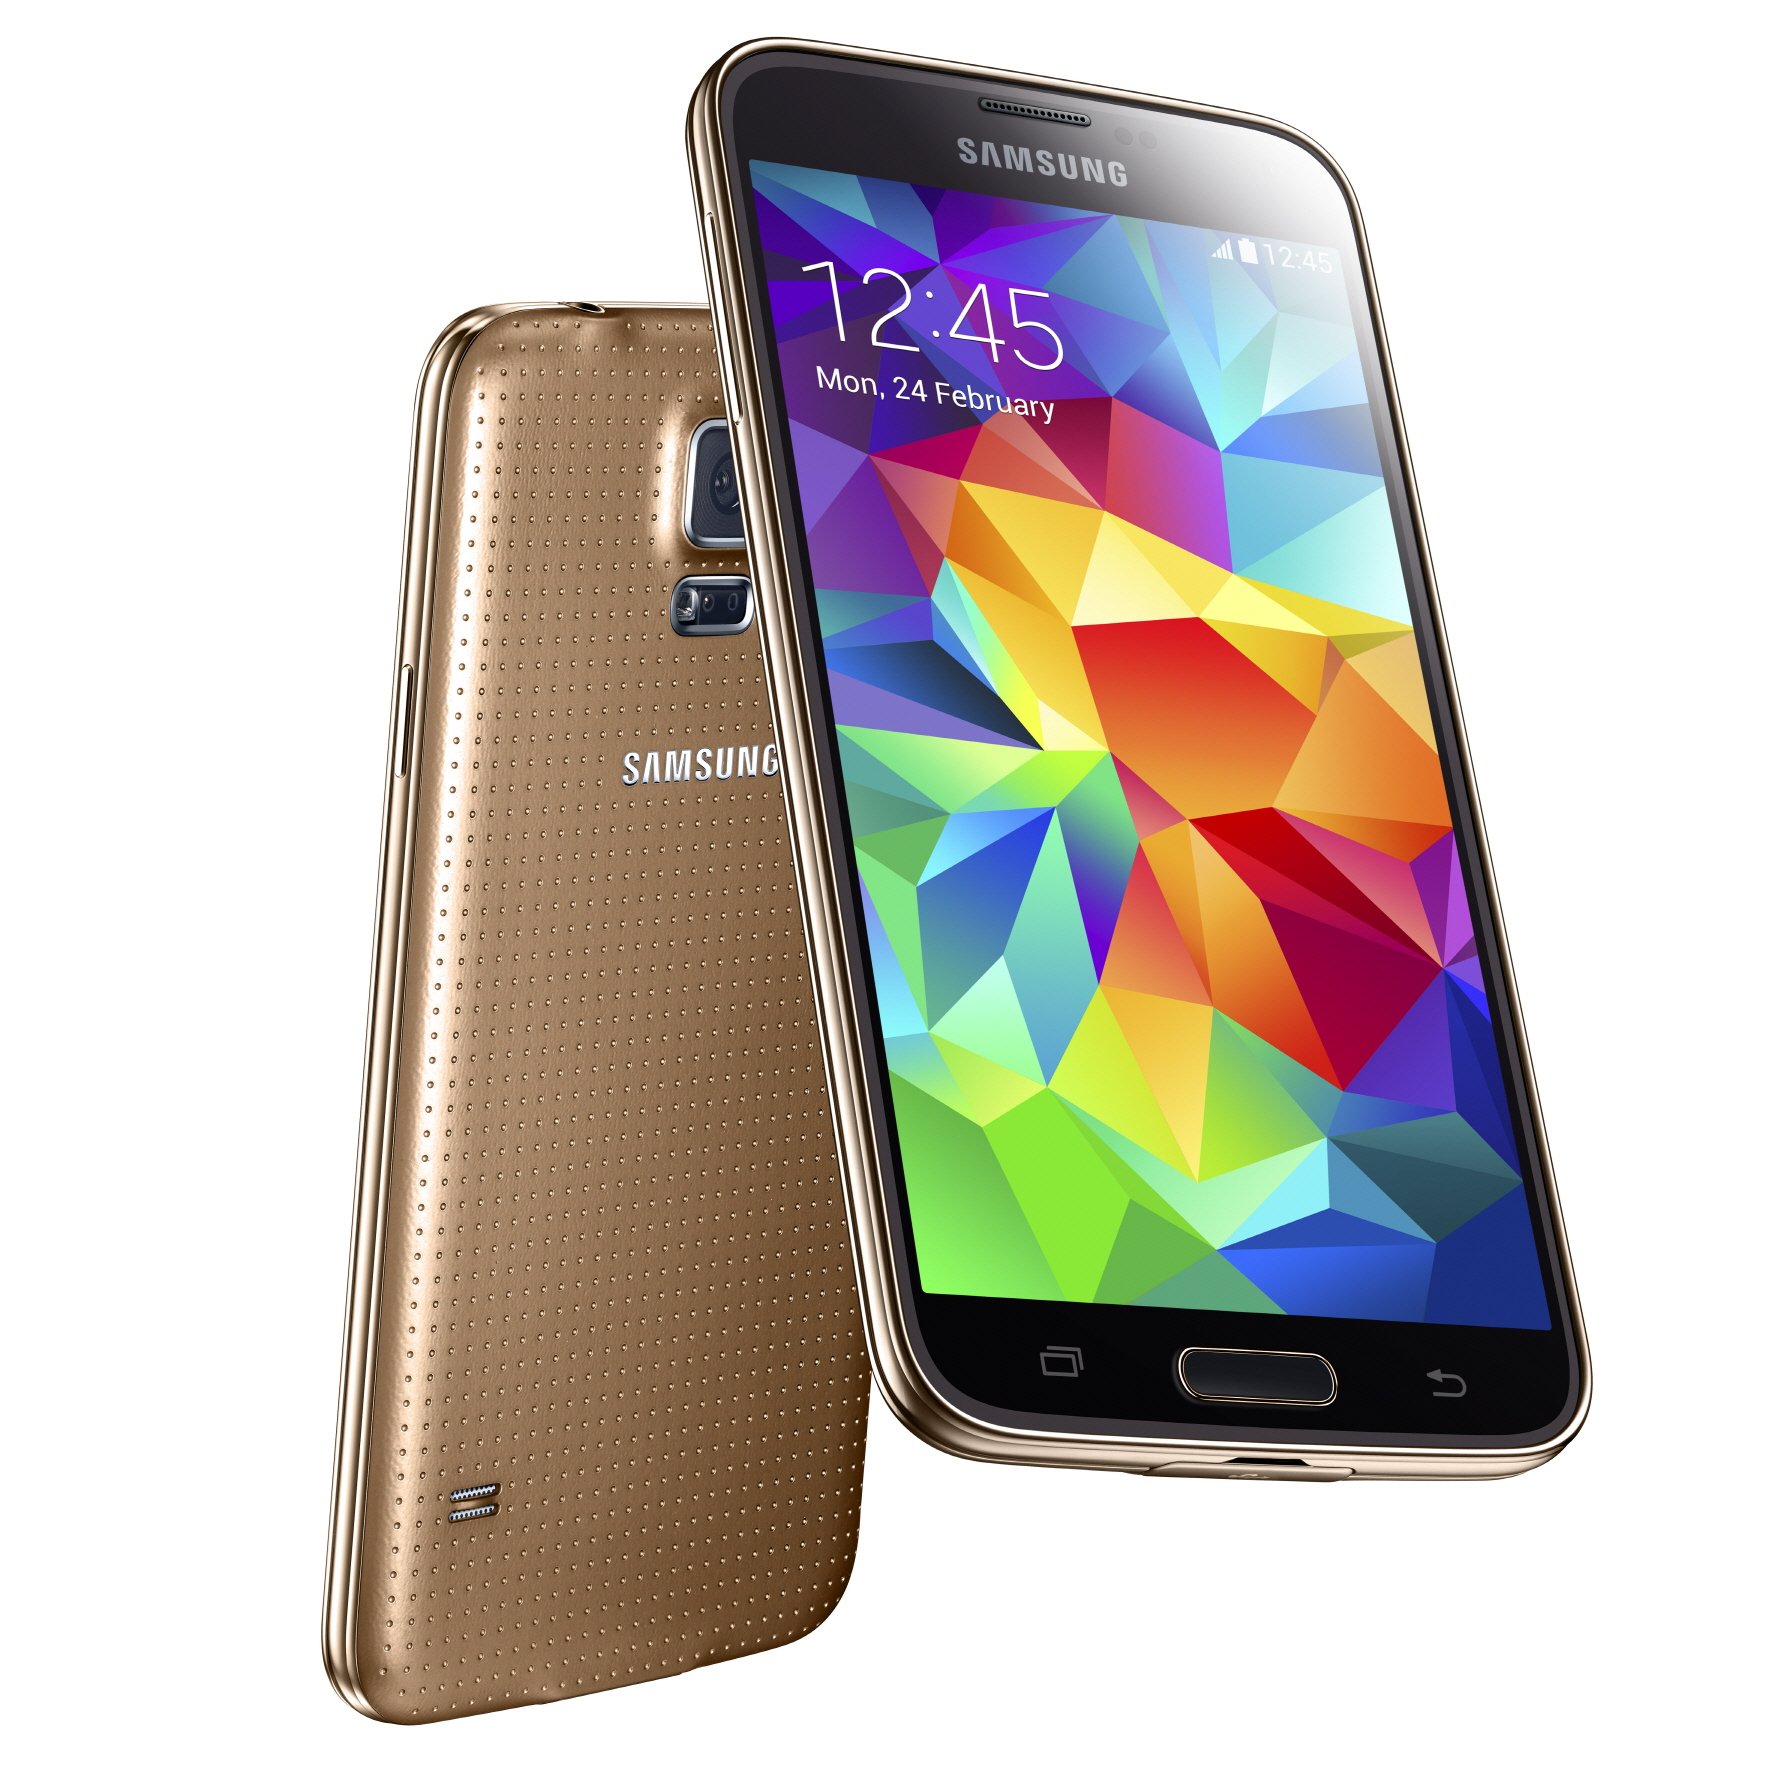 kleur Computerspelletjes spelen Festival Samsung Galaxy S5 Plus specs, review, release date - PhonesData